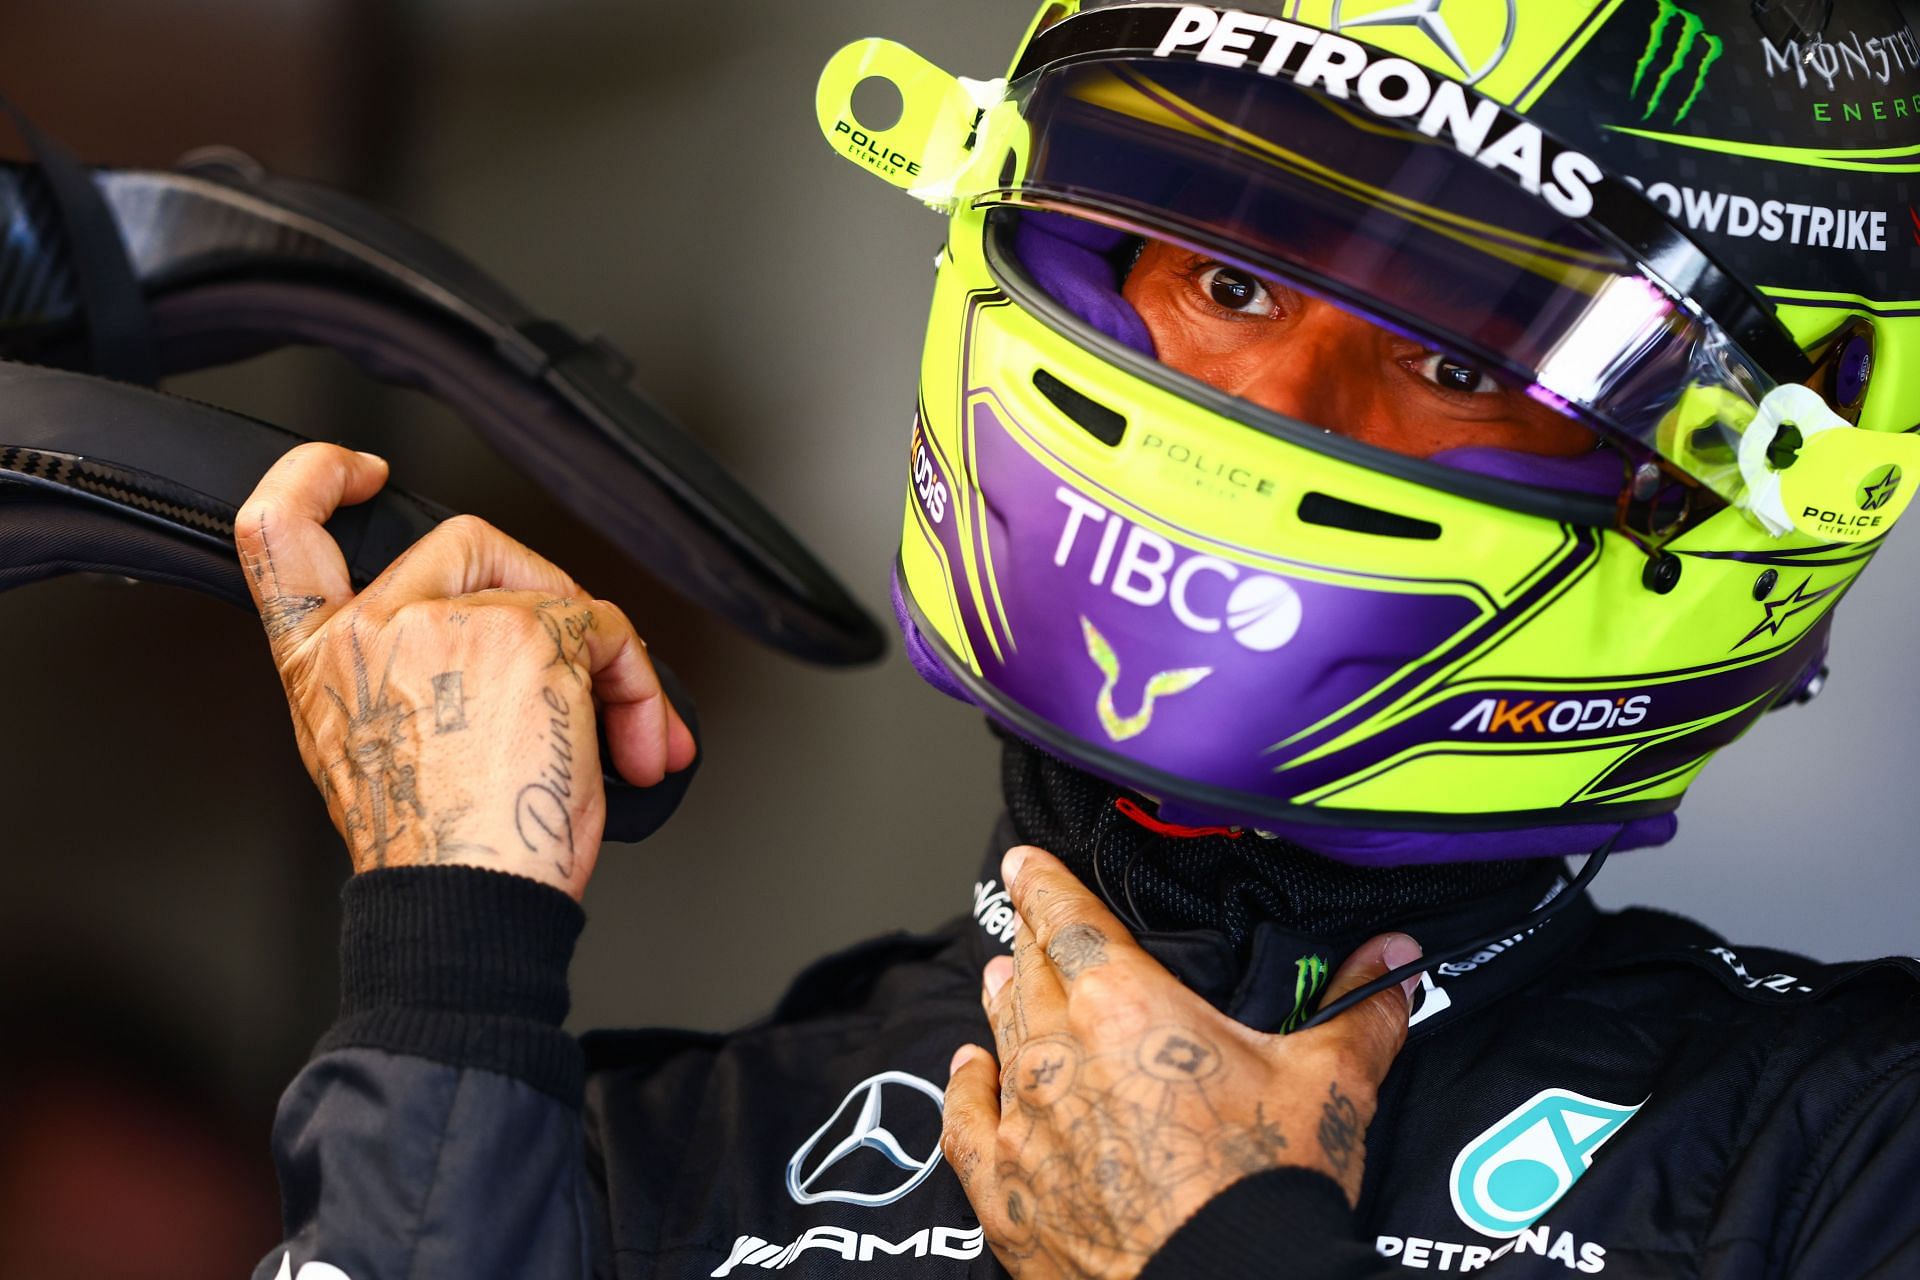 F1 Grand Prix of Miami - Final Practice - Lewis Hamilton prepares to drive out